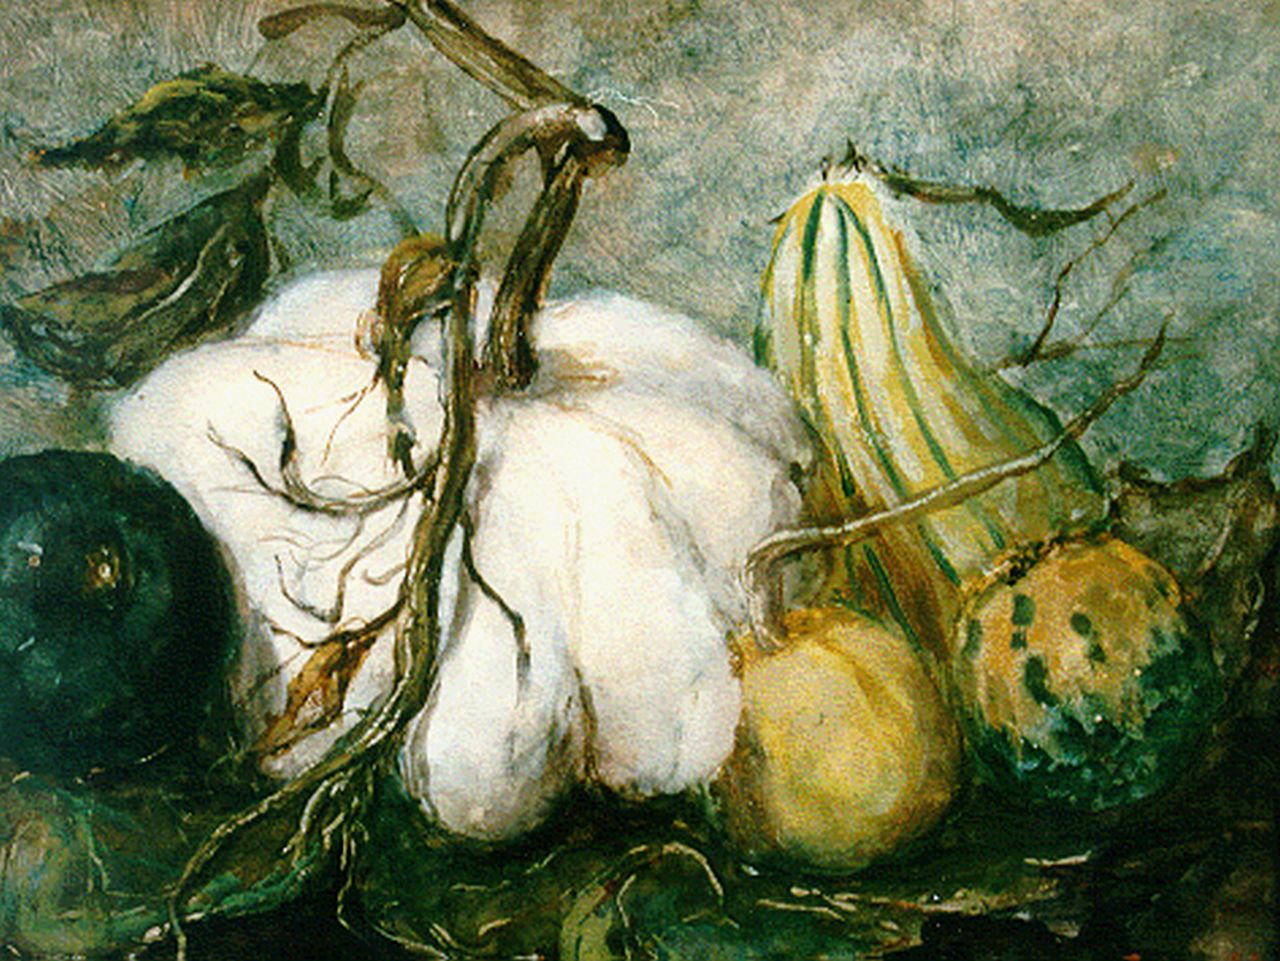 Mesdag-van Houten S.  | Sina 'Sientje' Mesdag-van Houten, Still life with pumpkins, watercolour on paper 27.3 x 37.8 cm, signed l.r. with initials